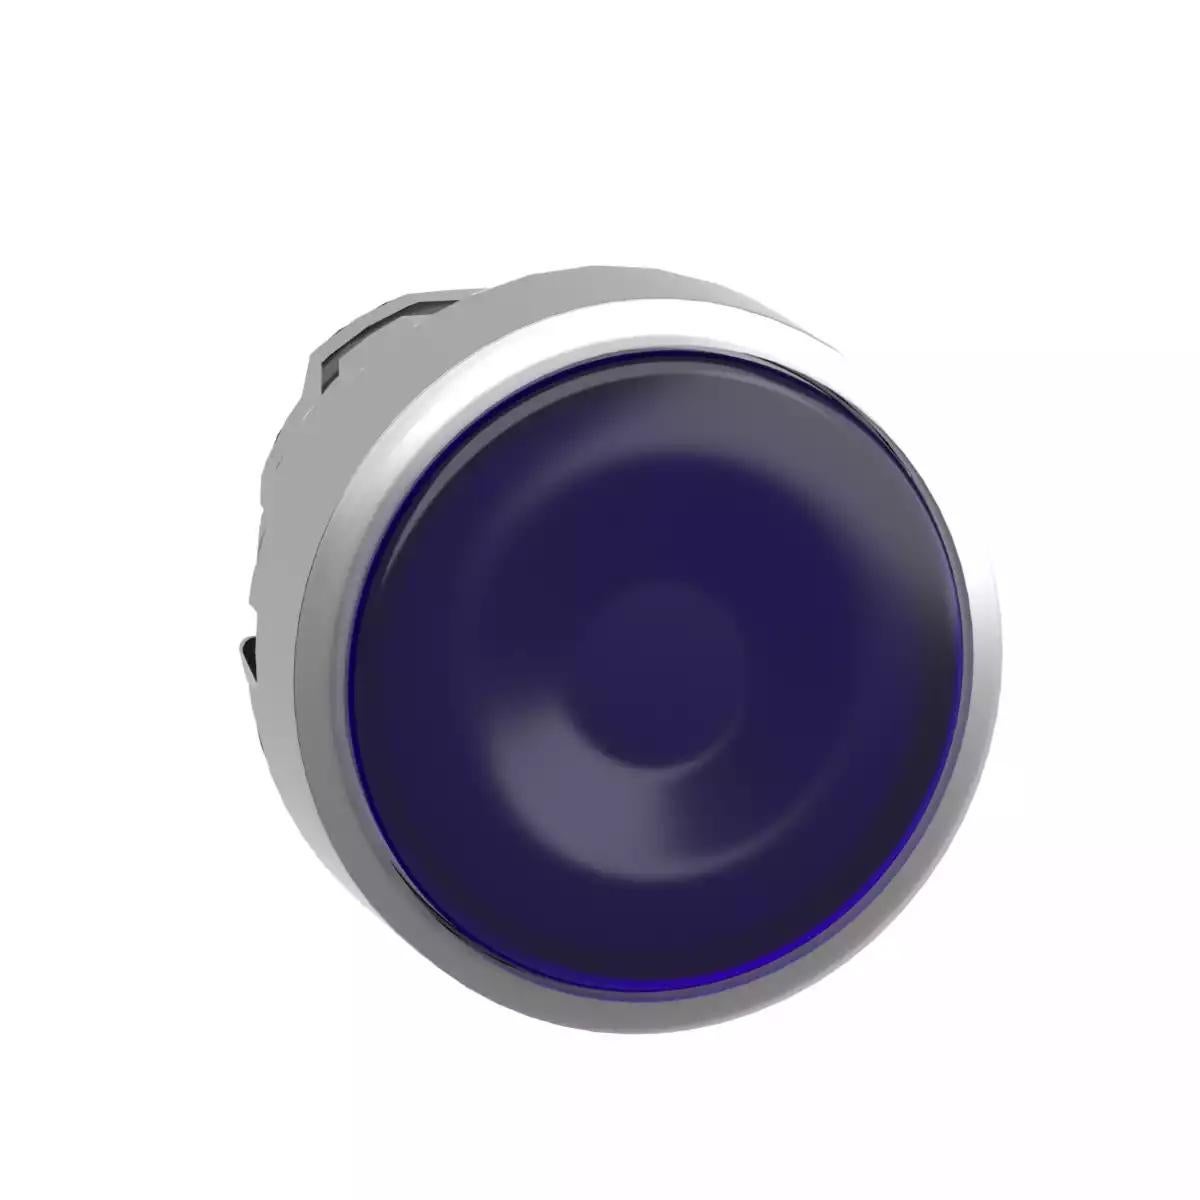 Head for illuminated push button, Harmony XB4, metal, blue flush, 22mm, universal LED, spring return, plan lens, unmarked